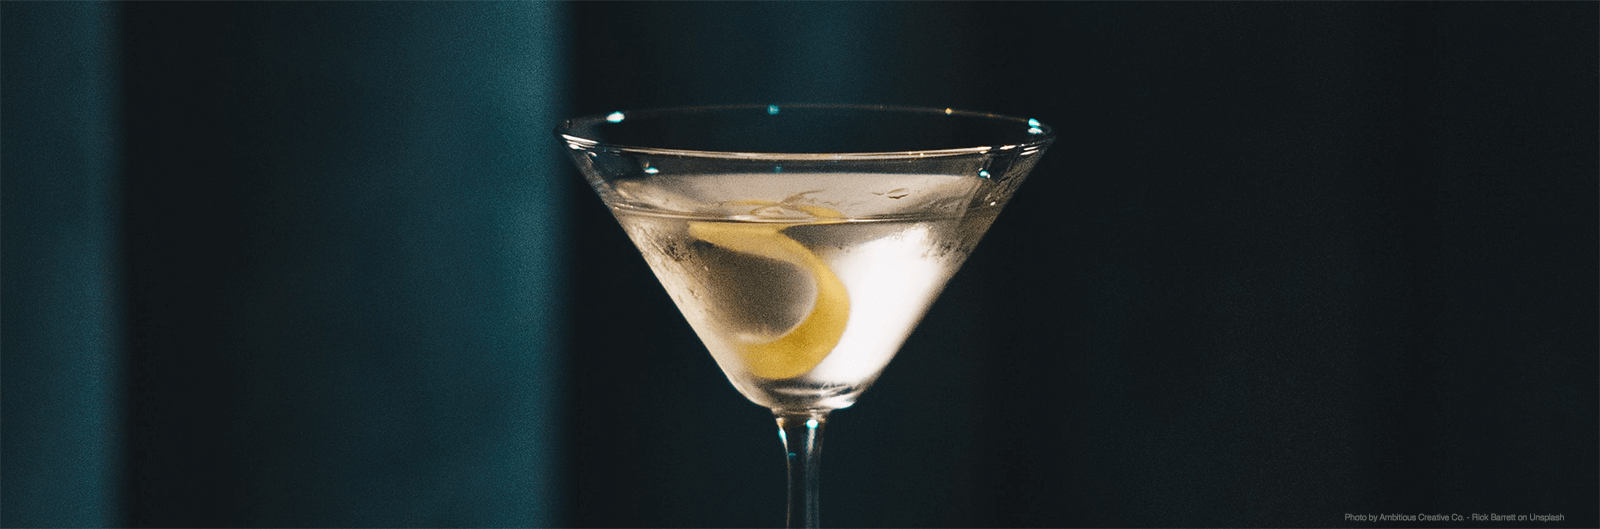 Martini on dark background